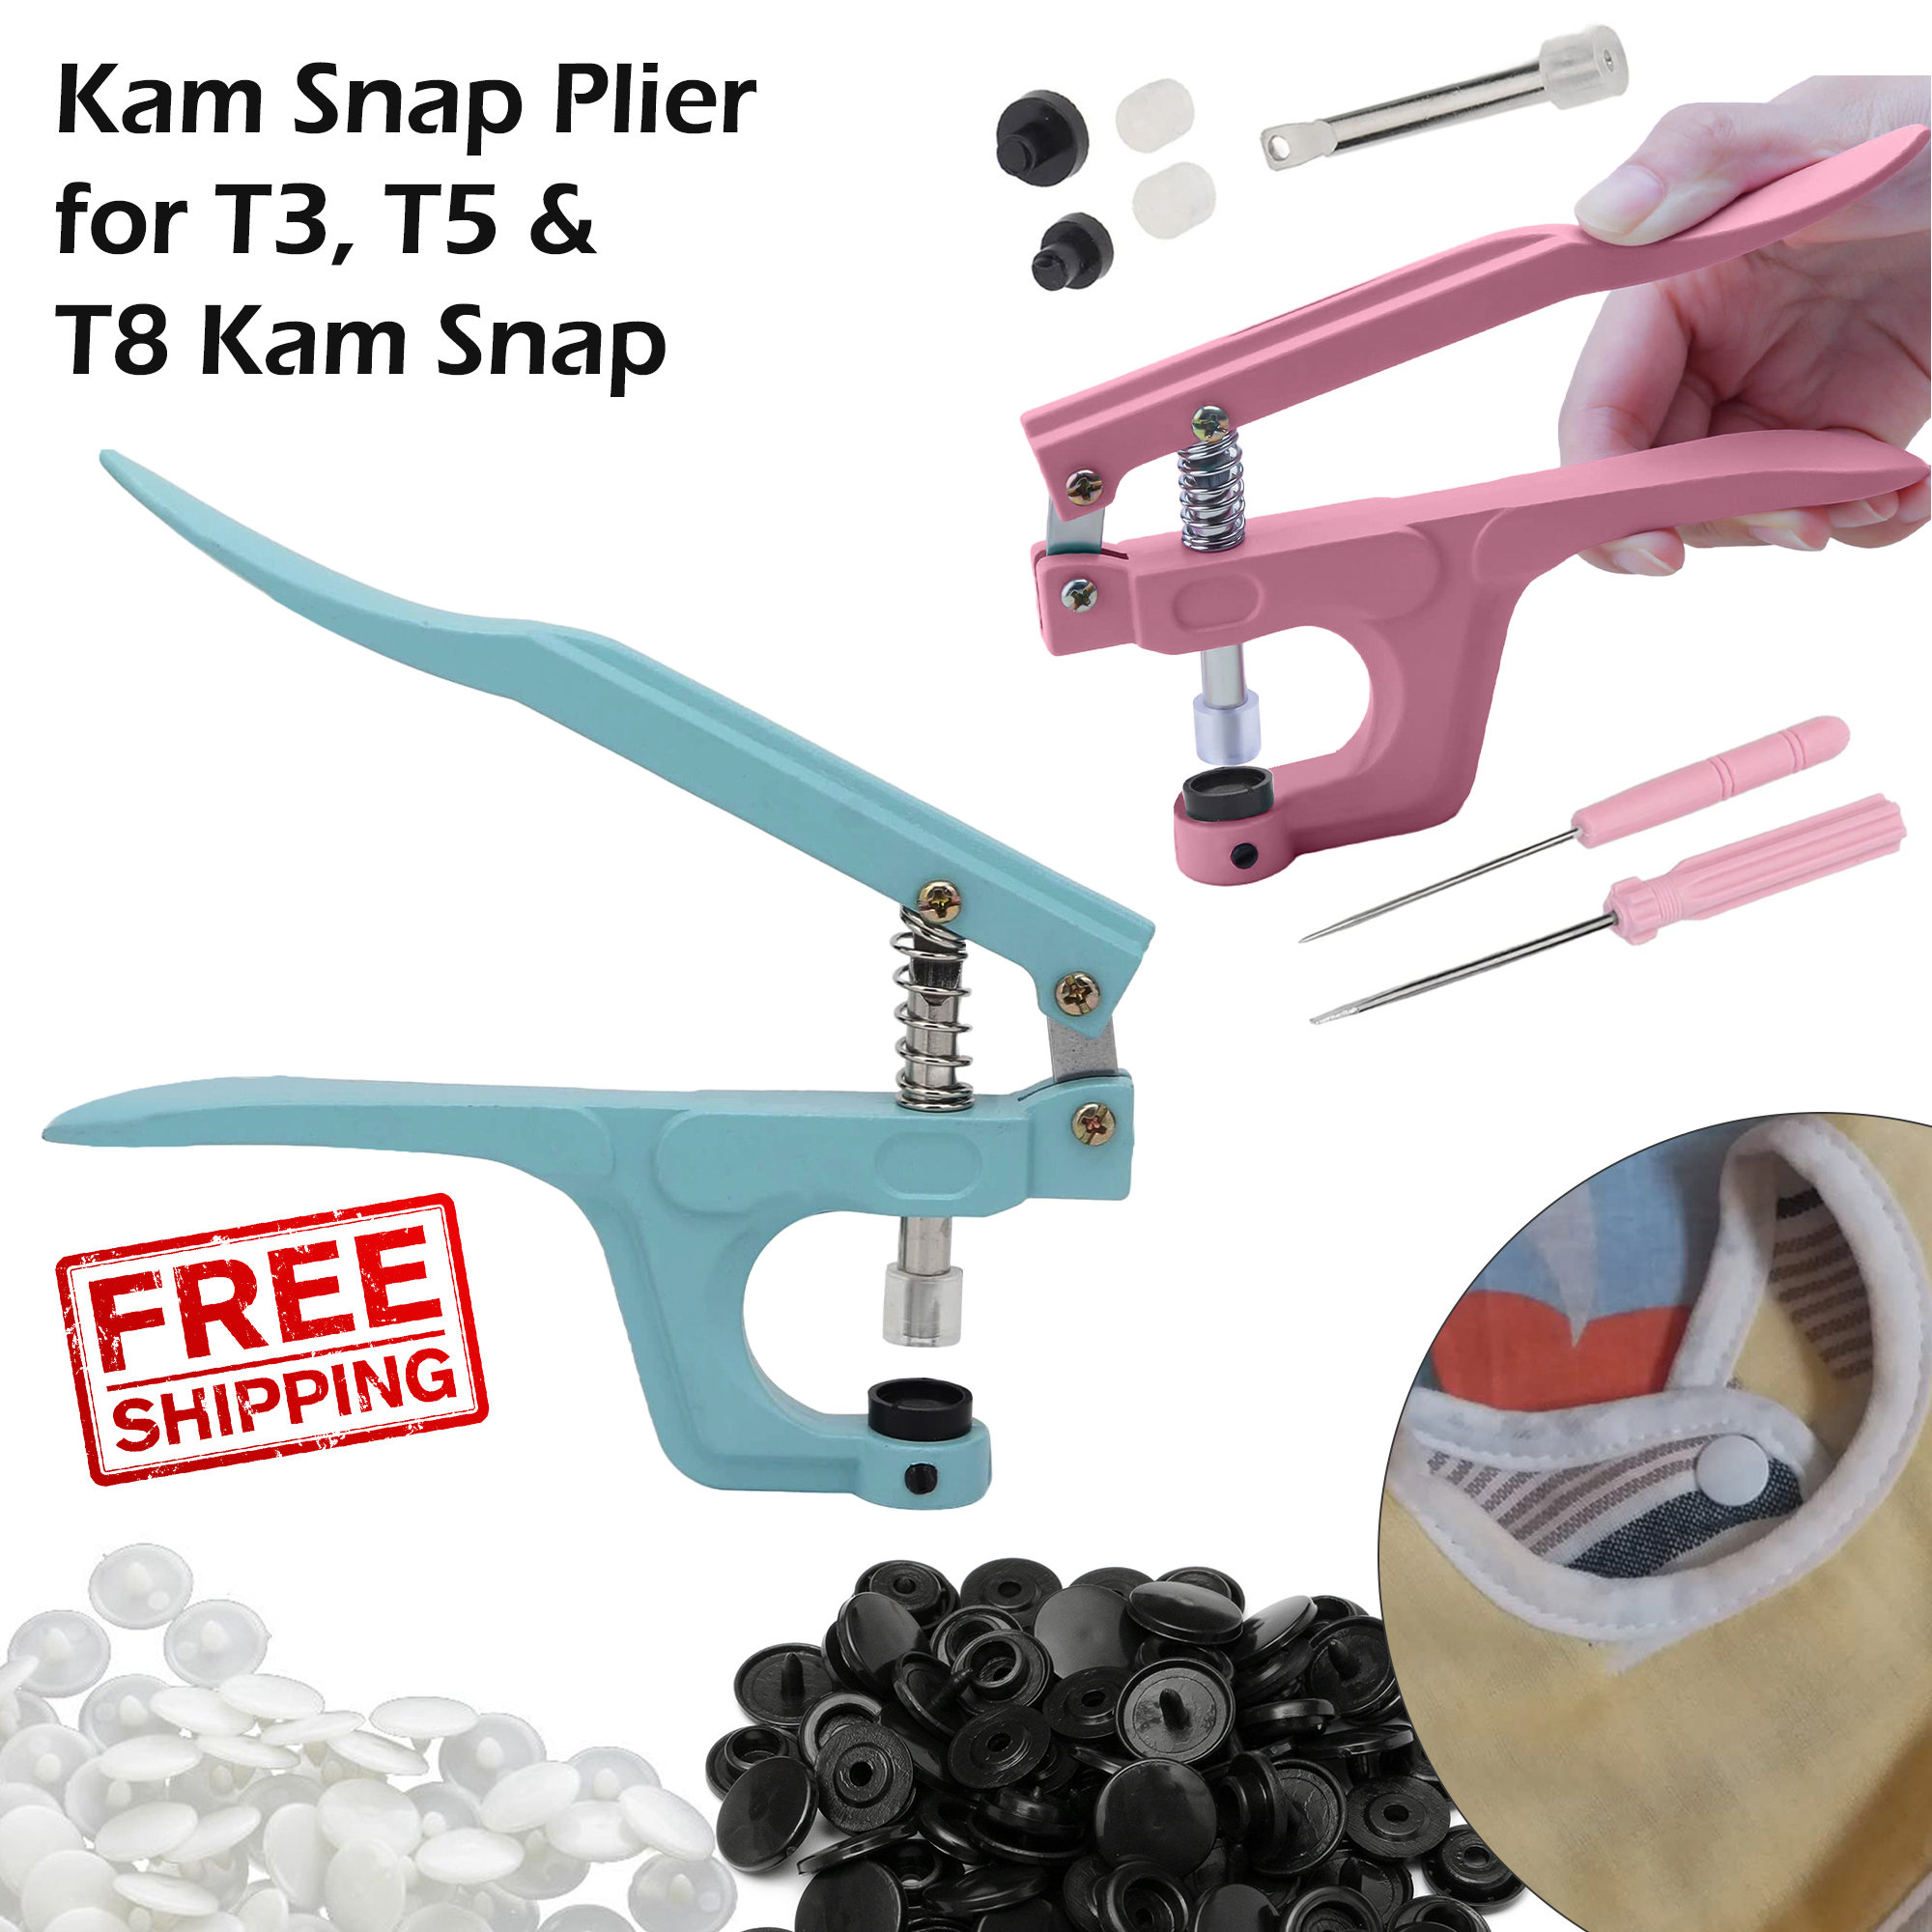 Genuine KAM Snap Press Pliers - T3, T5, T8 - Trimming Shop